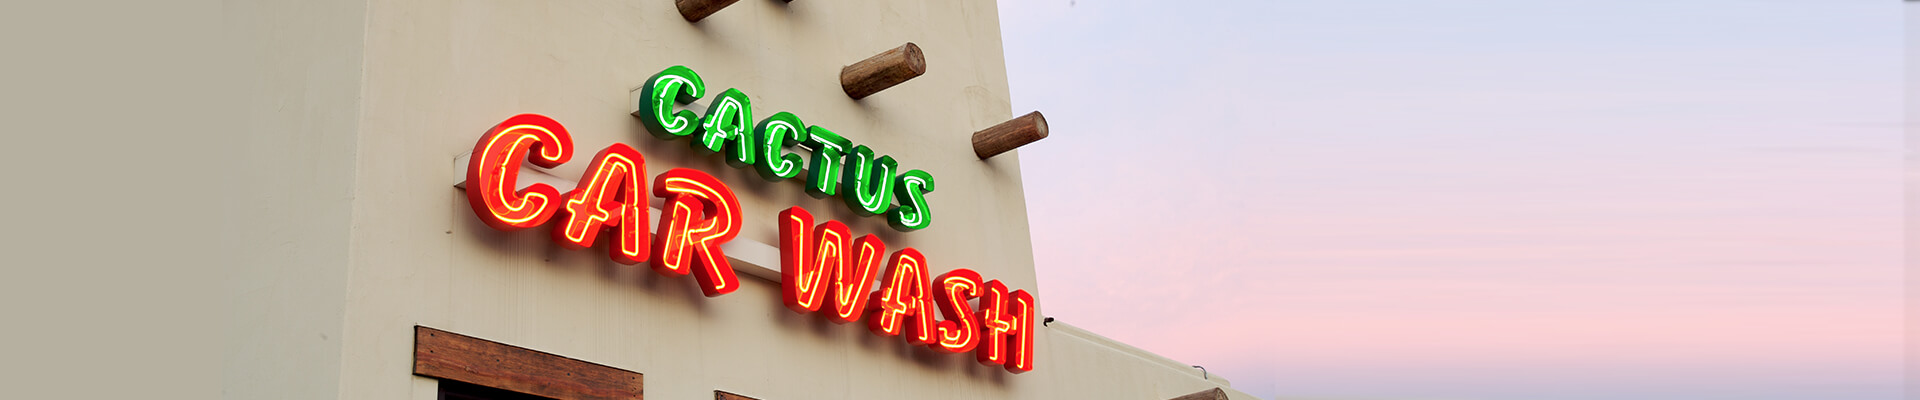 Cactus Milton Location Wins Best Car Wash 2020!